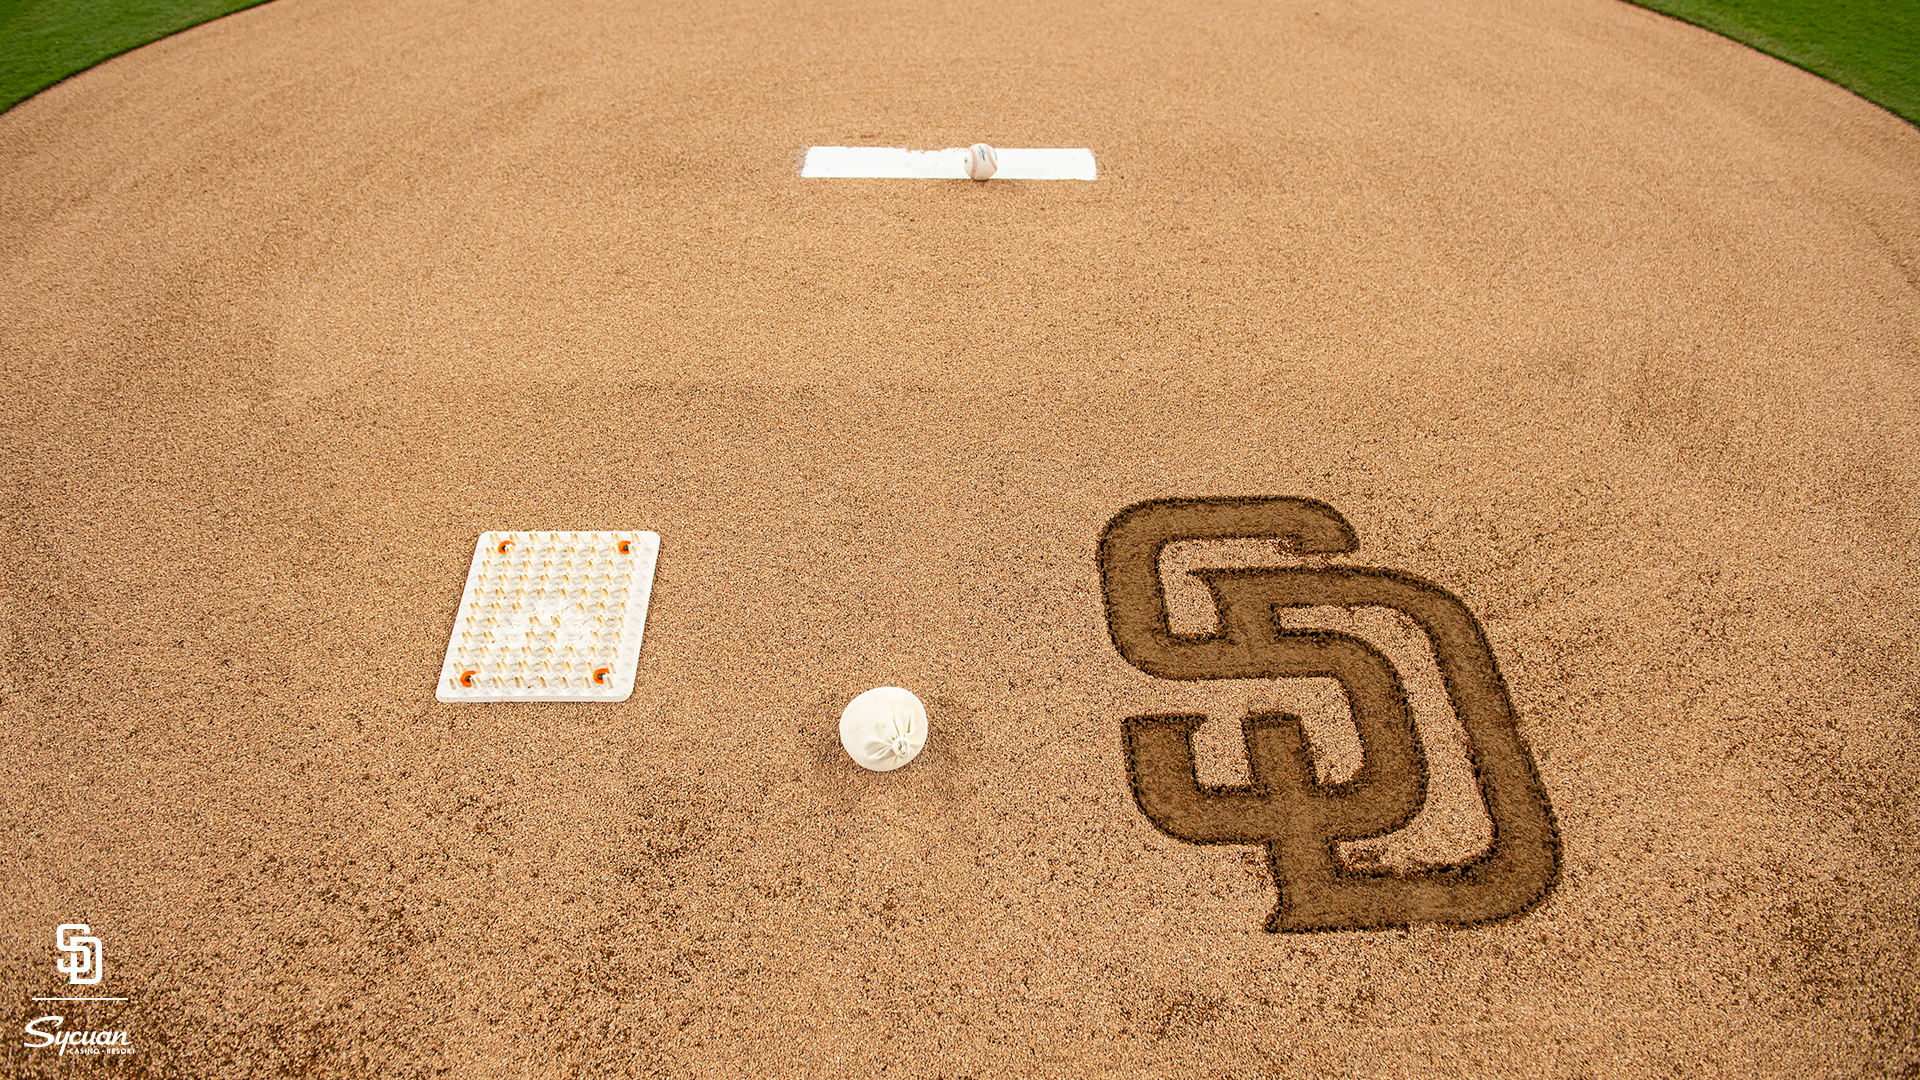 SAN DIEGO PADRES mlb baseball (4) wallpaper, 1920x1080, 231819